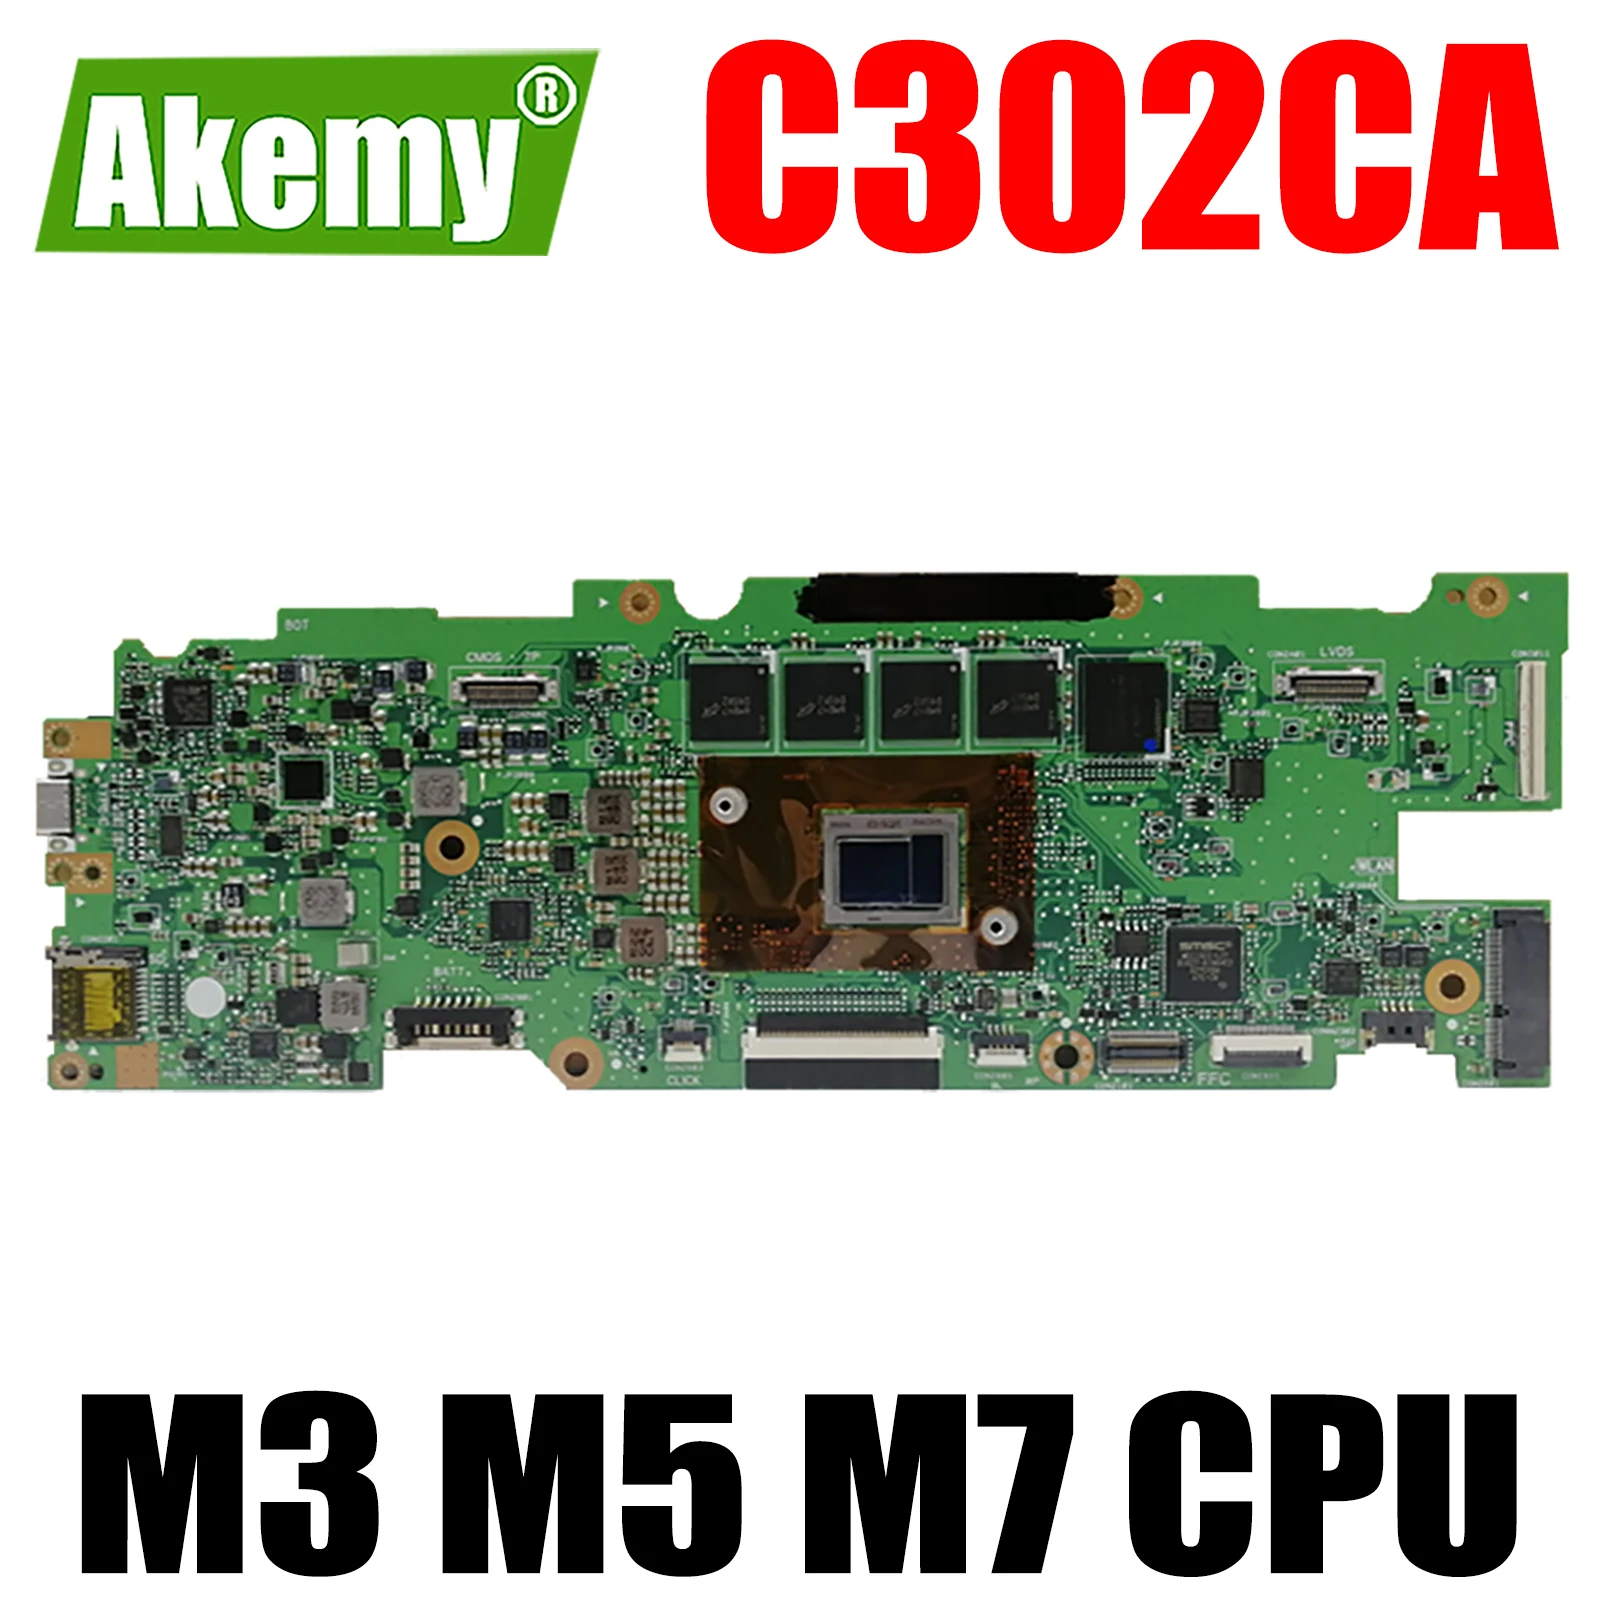 

For ASUS C302C C302CA Laotop Motherboard Mainboard 32G 64G 128G SSD 4GB 8GB 16GB RAM 4405Y M3 M5 M7 CPU C302CA Motherboard